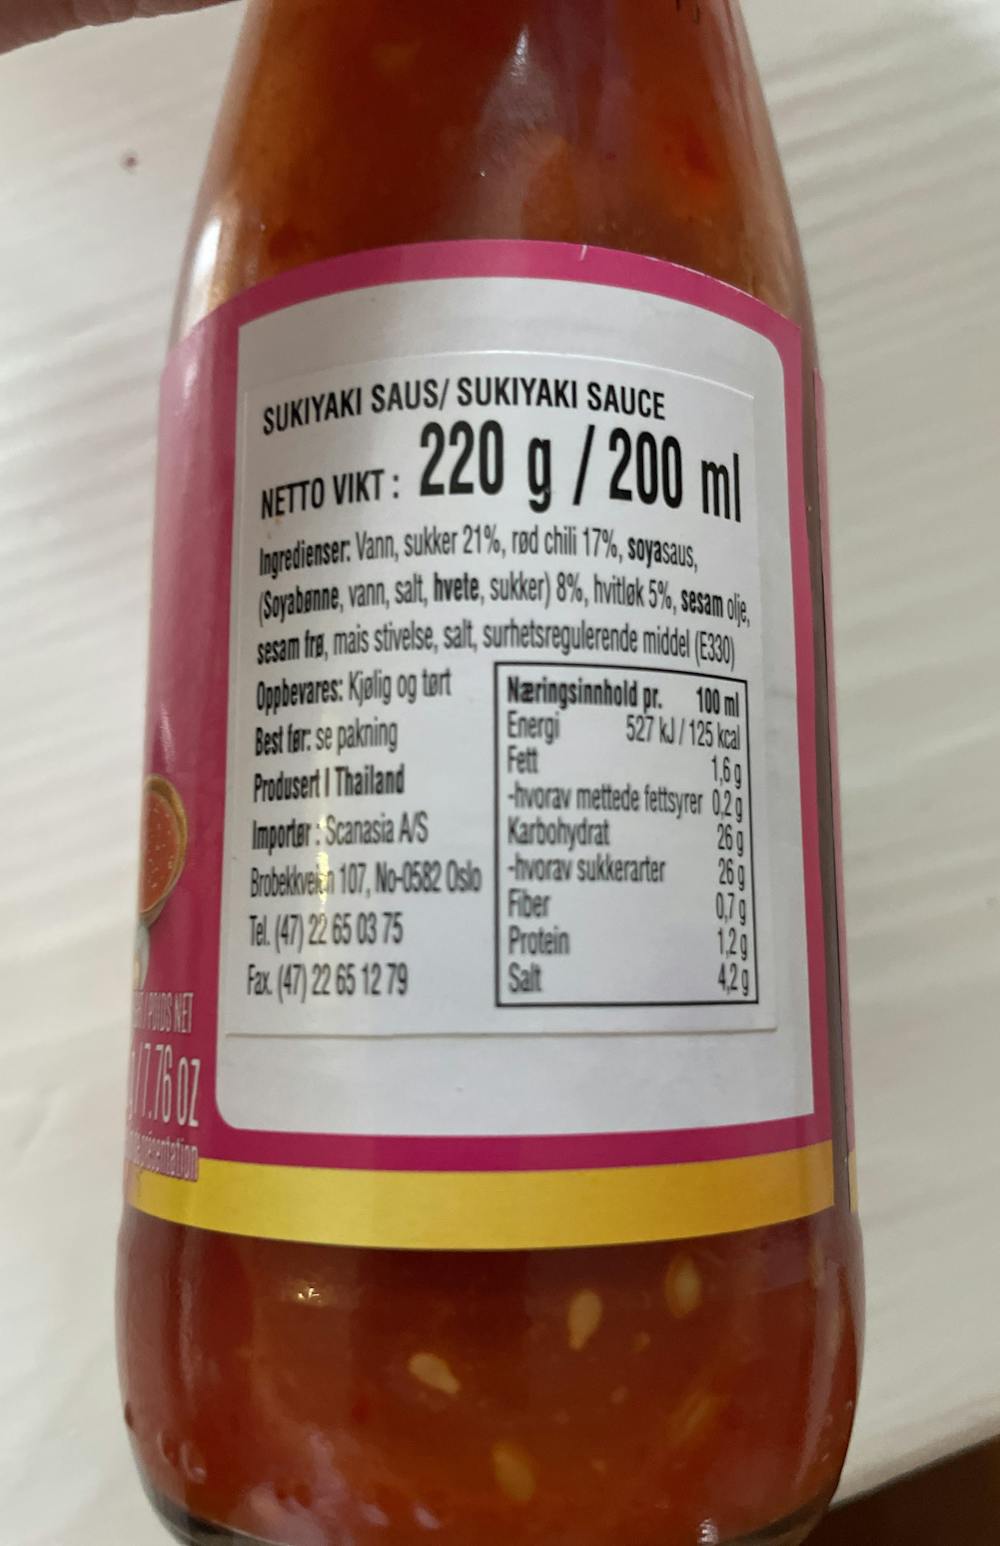 Ingrediensliste - Sukiyaki saus, Thai agri foods public company limited